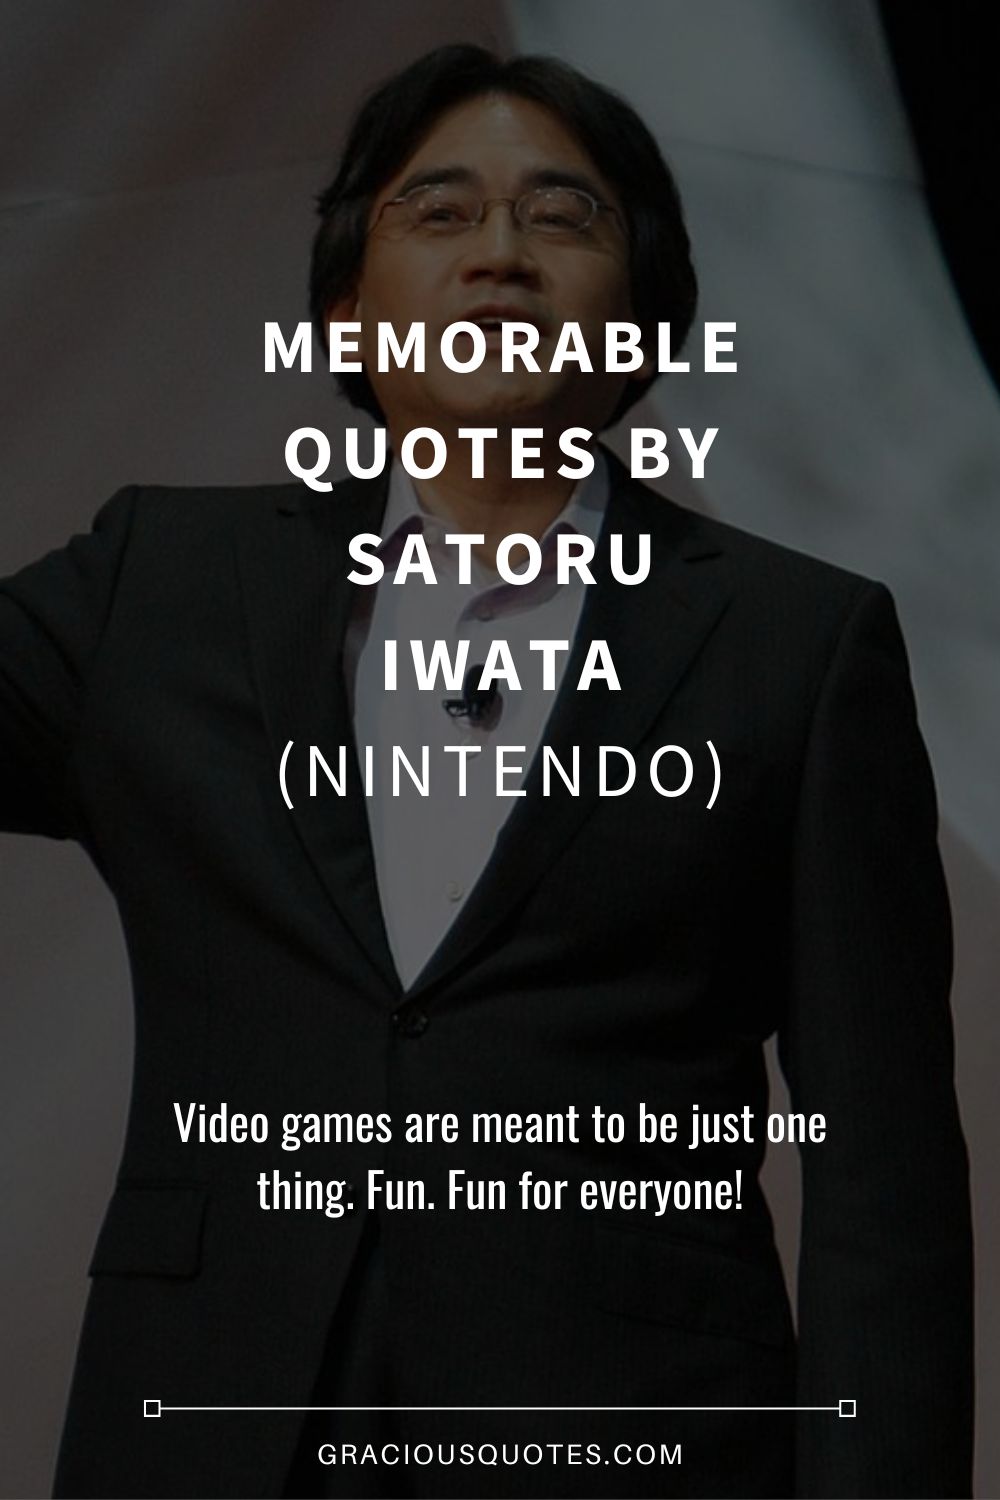 Memorable Quotes by Satoru Iwata (NINTENDO) - Gracious Quotes